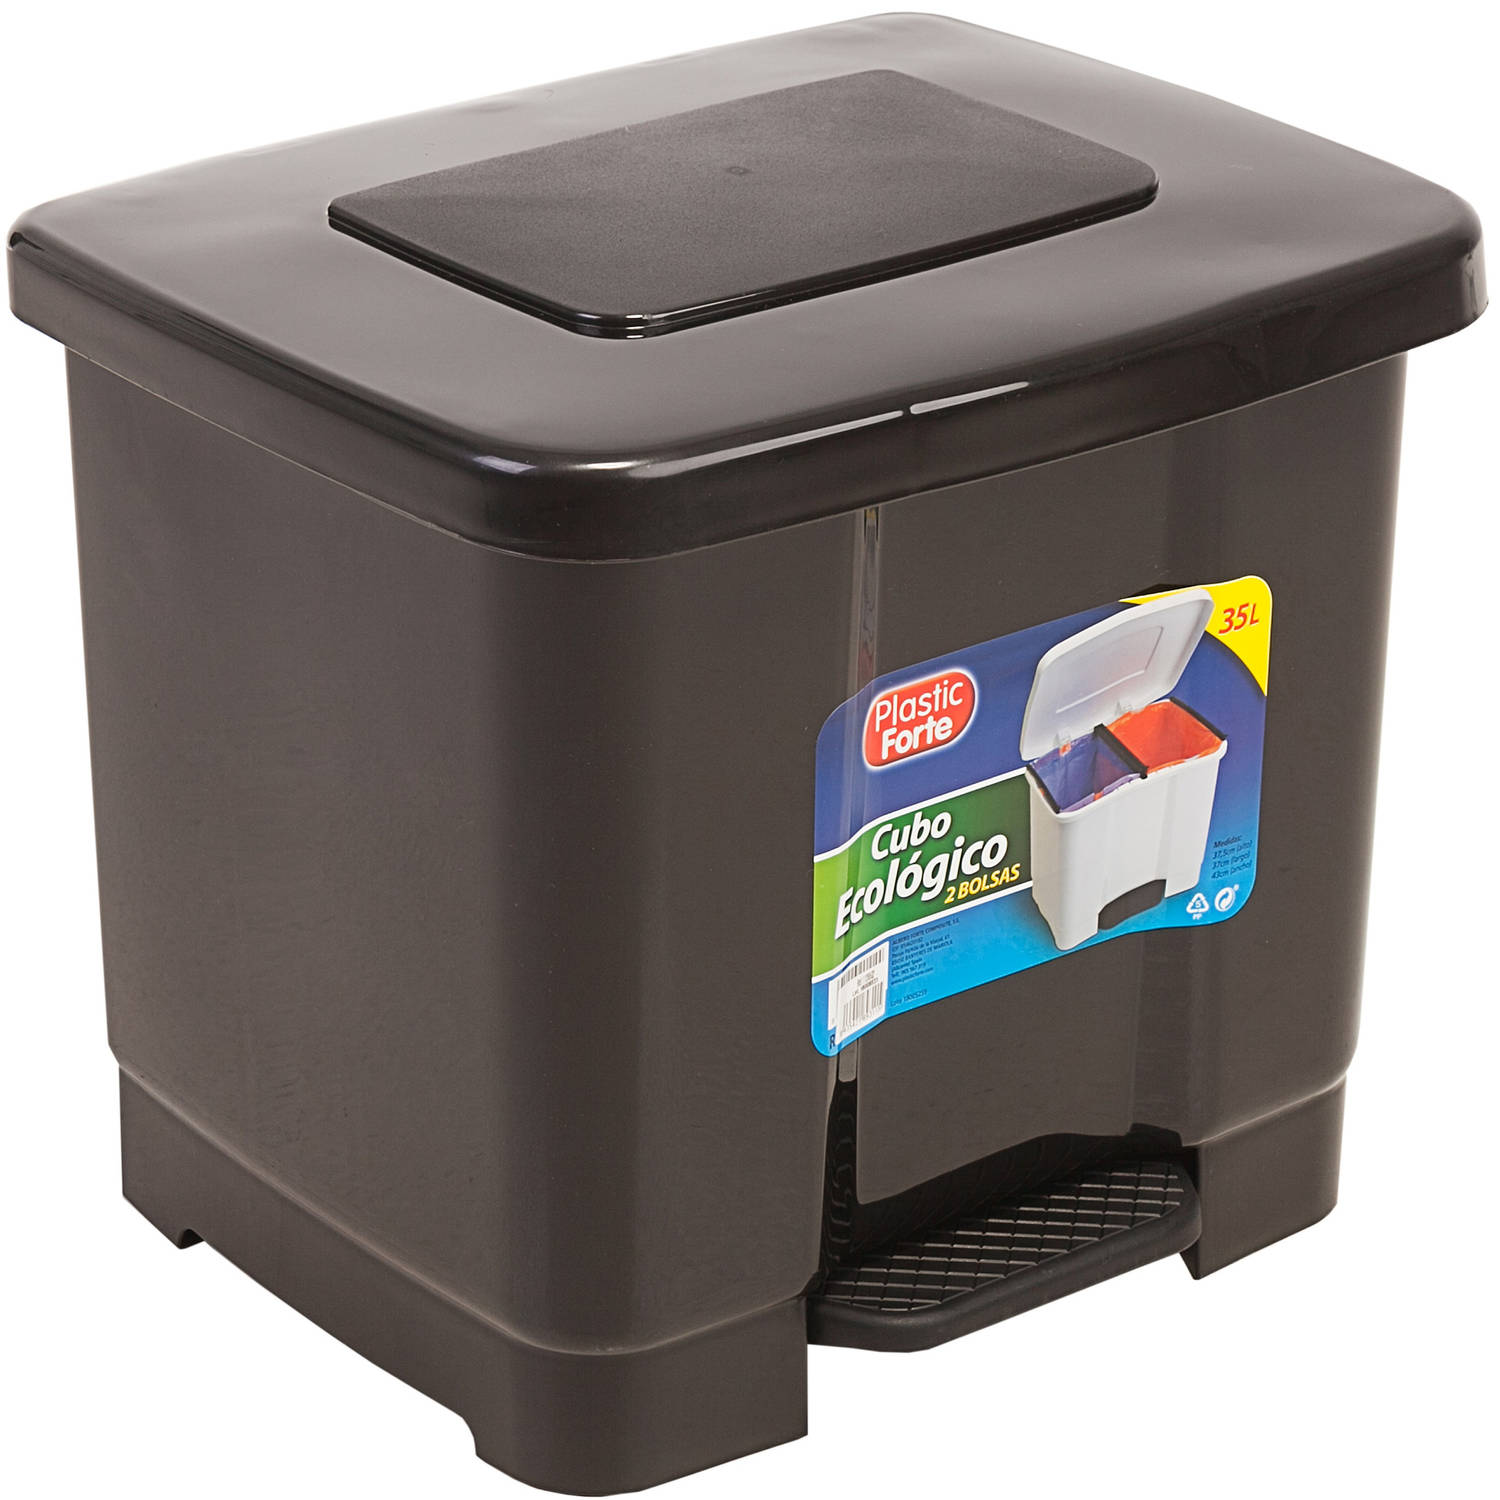 Dubbele afvalemmer/vuilnisemmer donkergrijs 35 liter met deksel en pedaal - Pedaalemmers